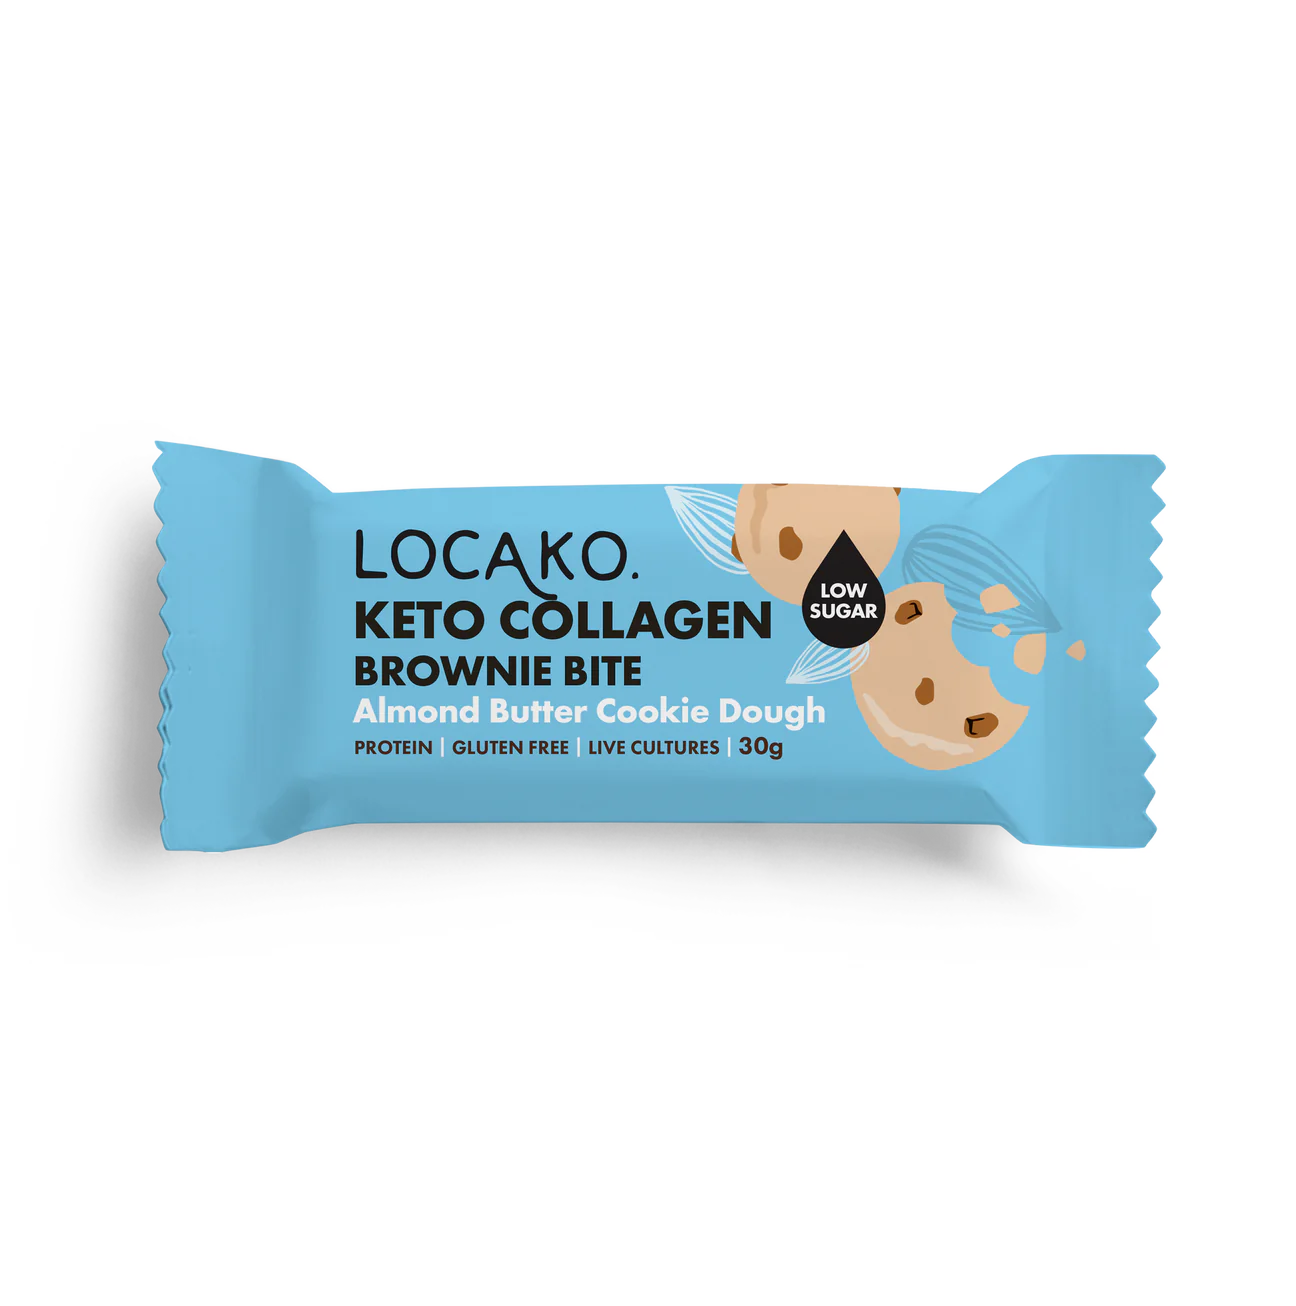 Keto Collagen Brownie Bite - Almond Butter Cookie Dough - Locako